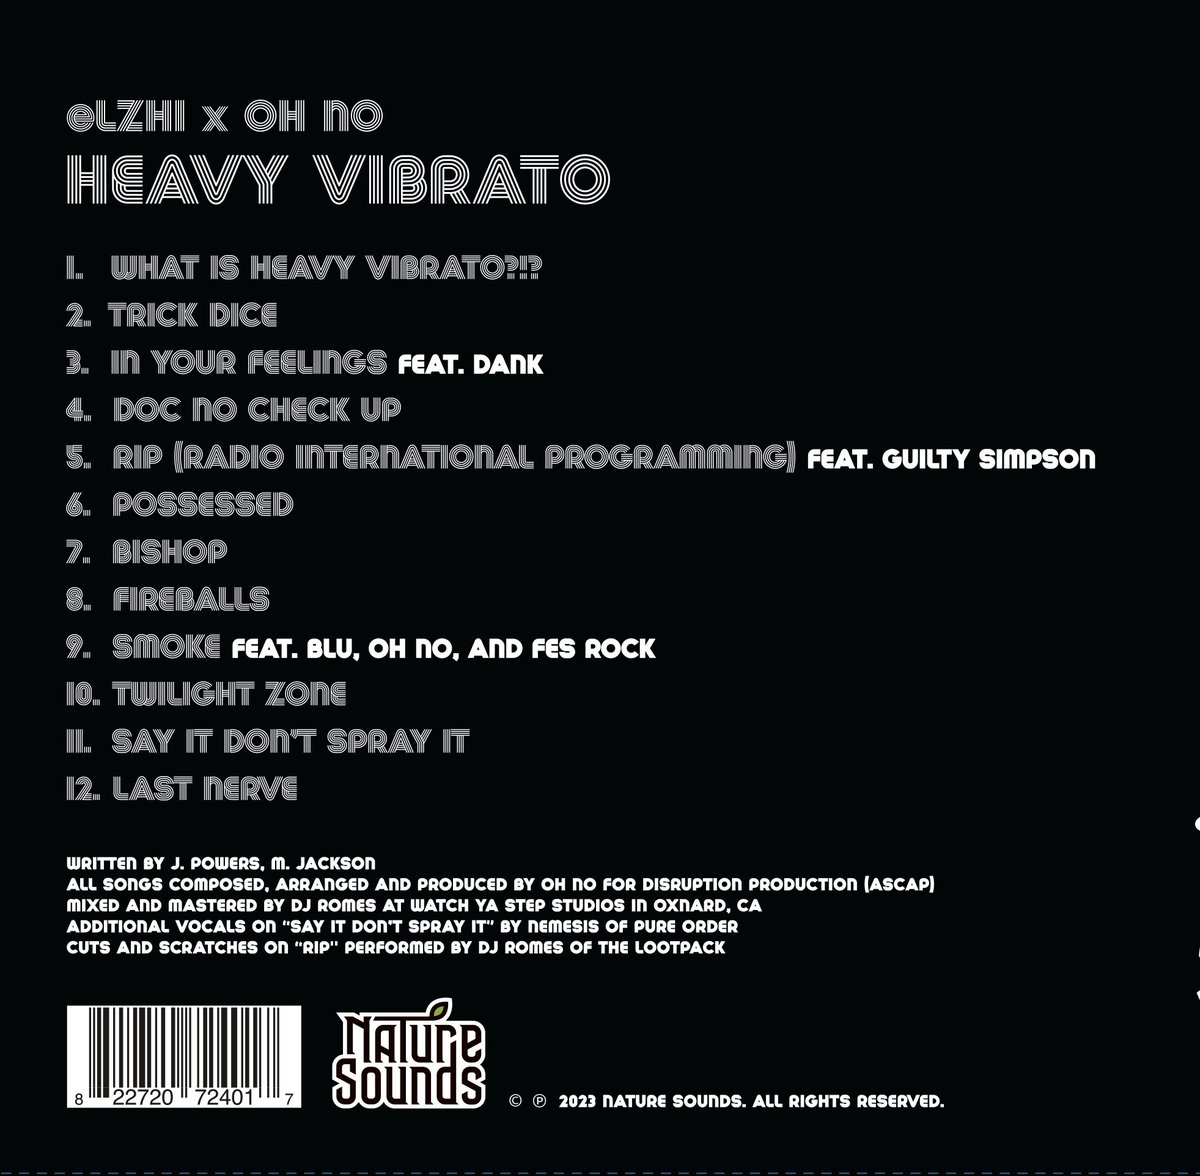 Heavy Vibrato out Friday ⚡️